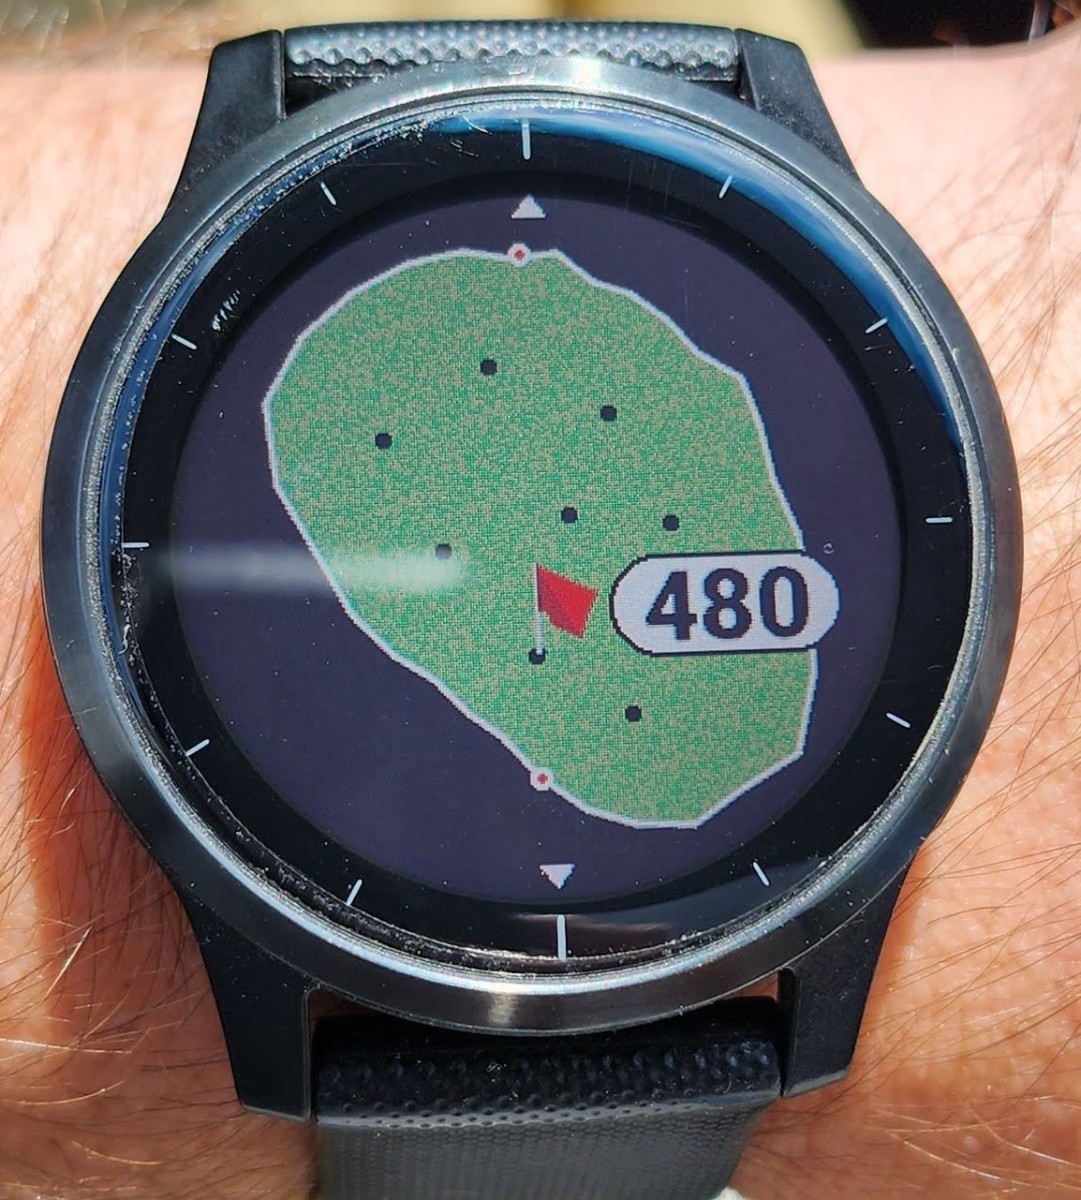 Garmin vivoactive 4 test – fitness smartwatch for travel?